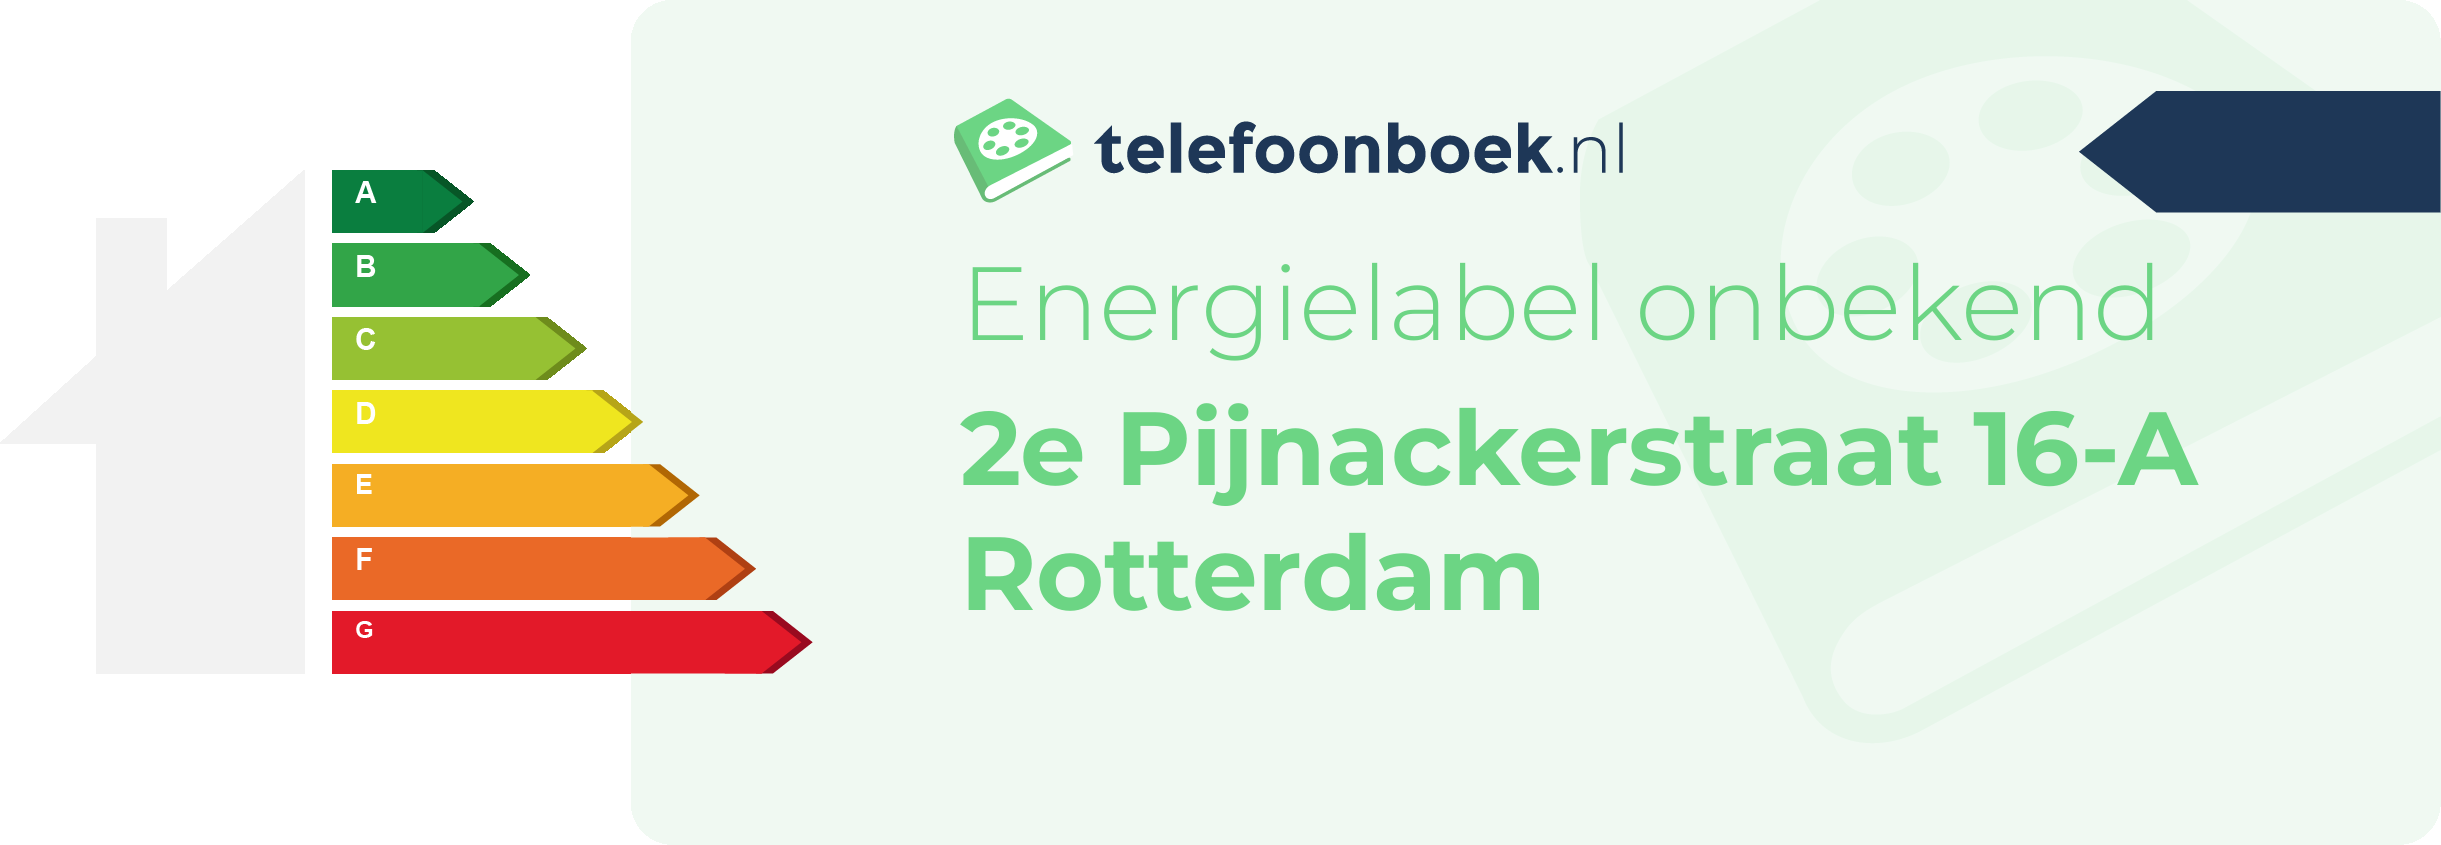 Energielabel 2e Pijnackerstraat 16-A Rotterdam